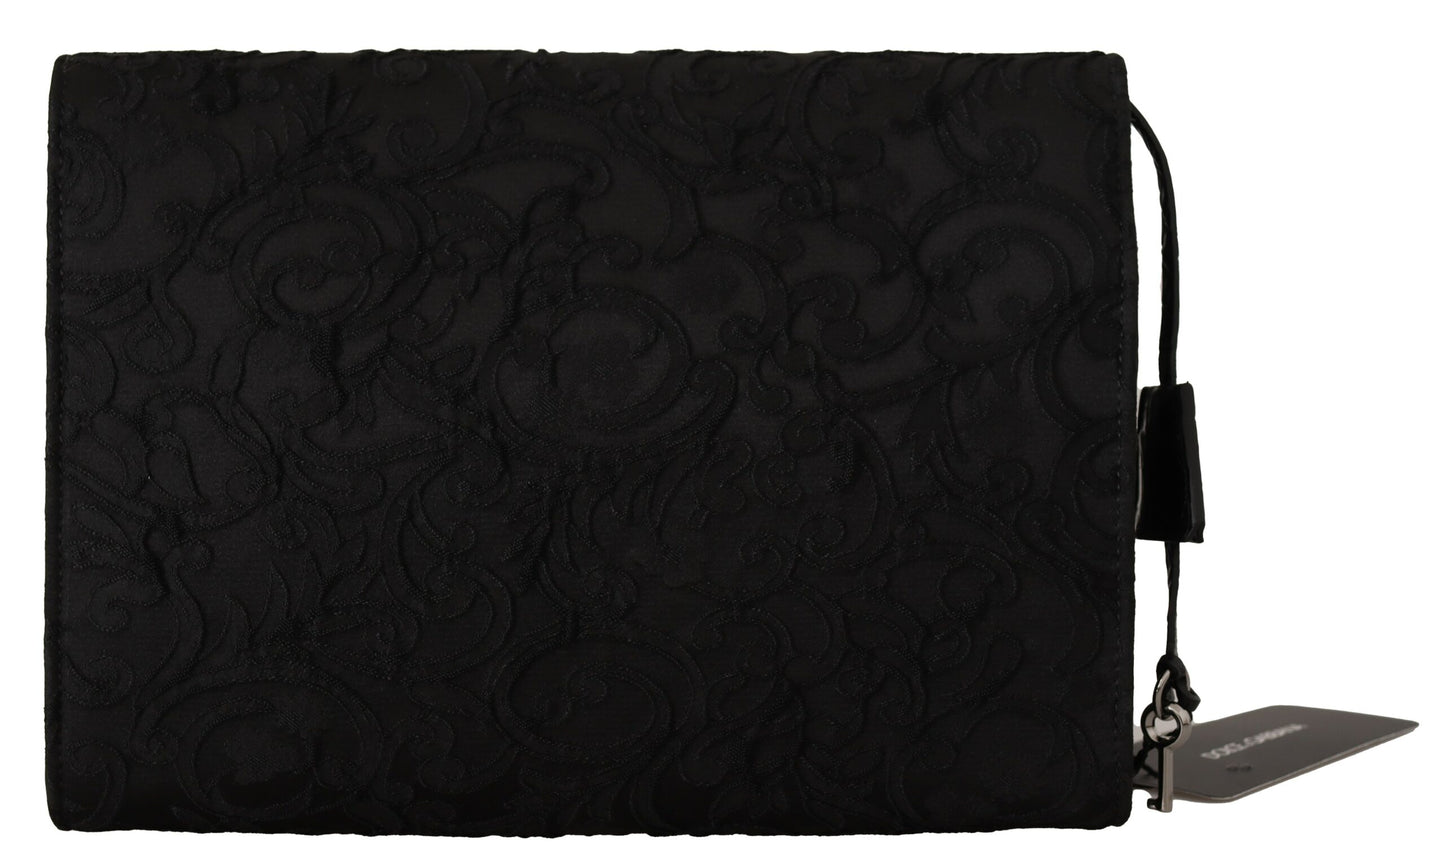 Dolce & Gabbana Black Jacquard Leather Document Document Baggin